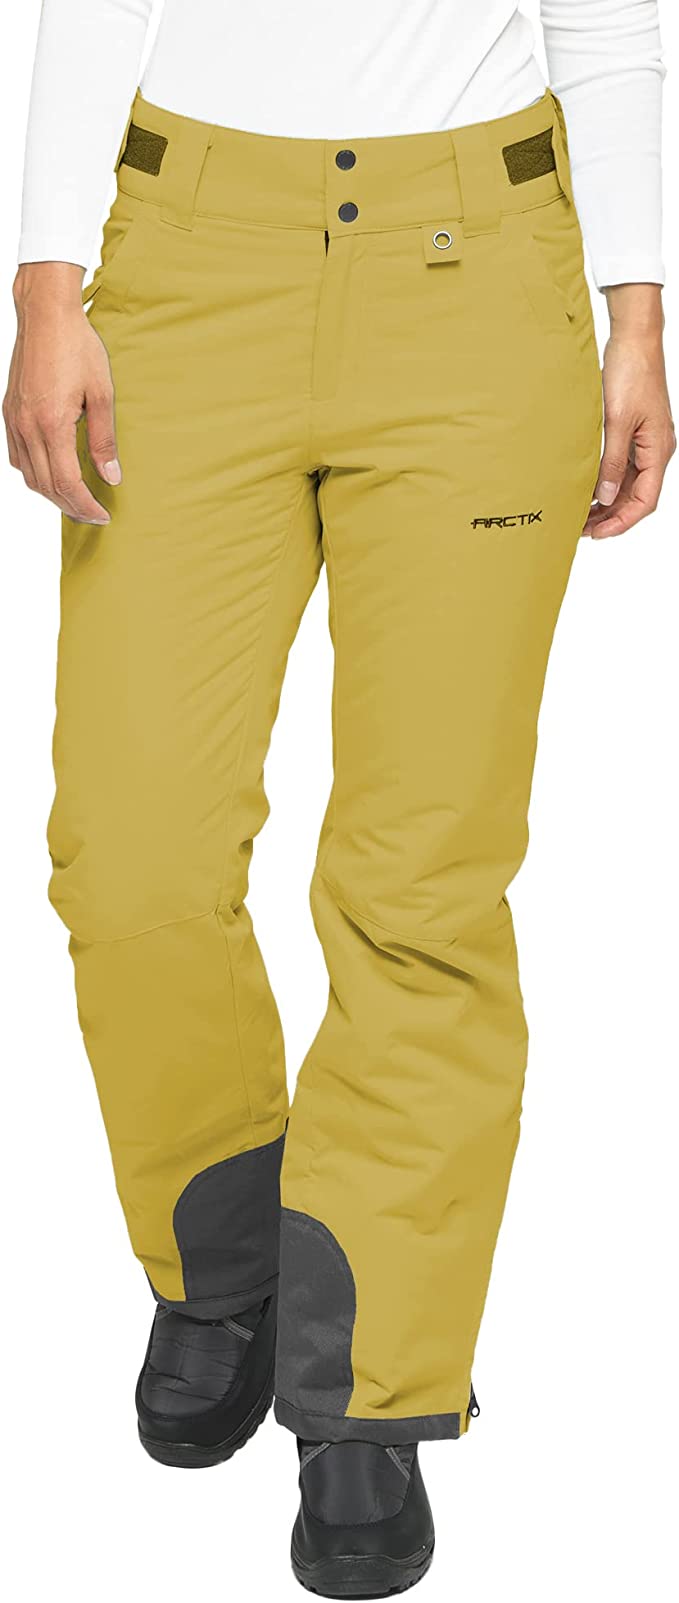 Arctix Arctix Premium Pants - Women's